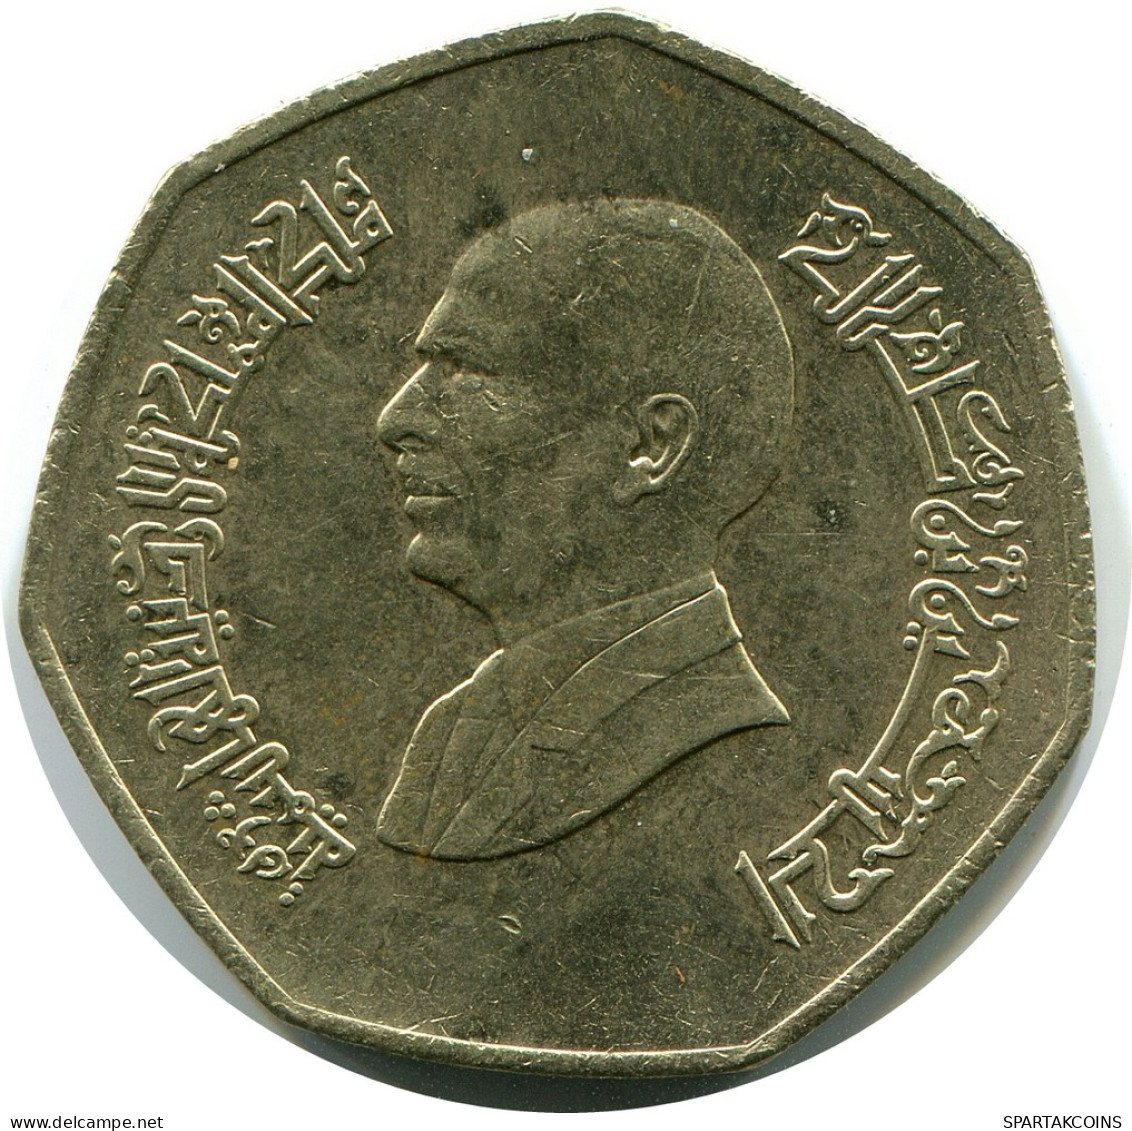 1/4 DINAR 1996 JORDAN Coin #AP079.U - Jordanien